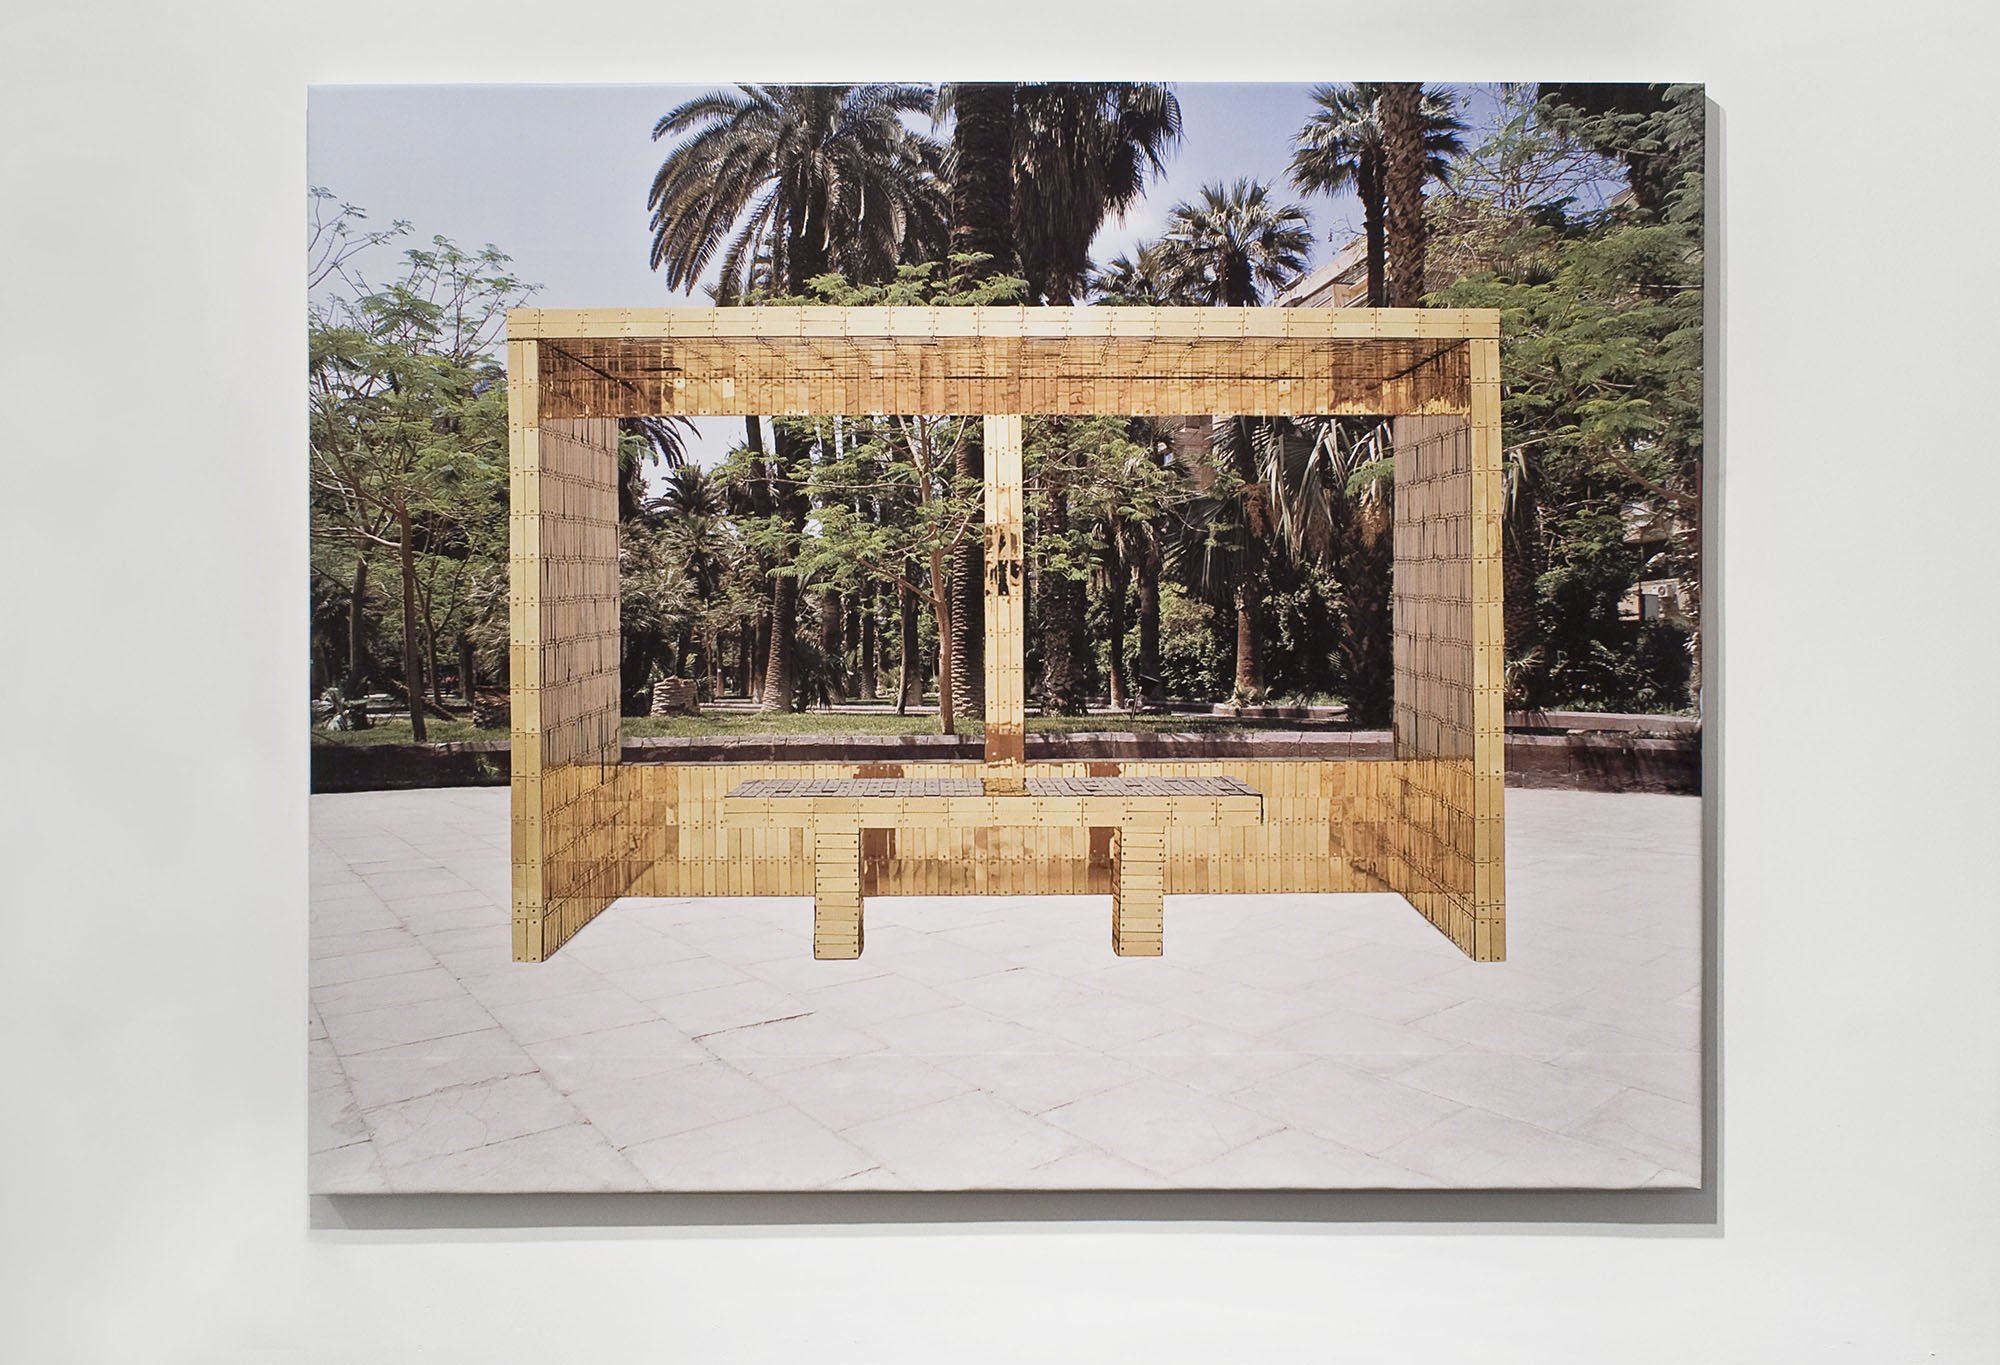 Iman Issa, Bus Station (Meeting Point Series), vinyl print, 200 x 160 cm (78 3/4 x 63 in), 2004